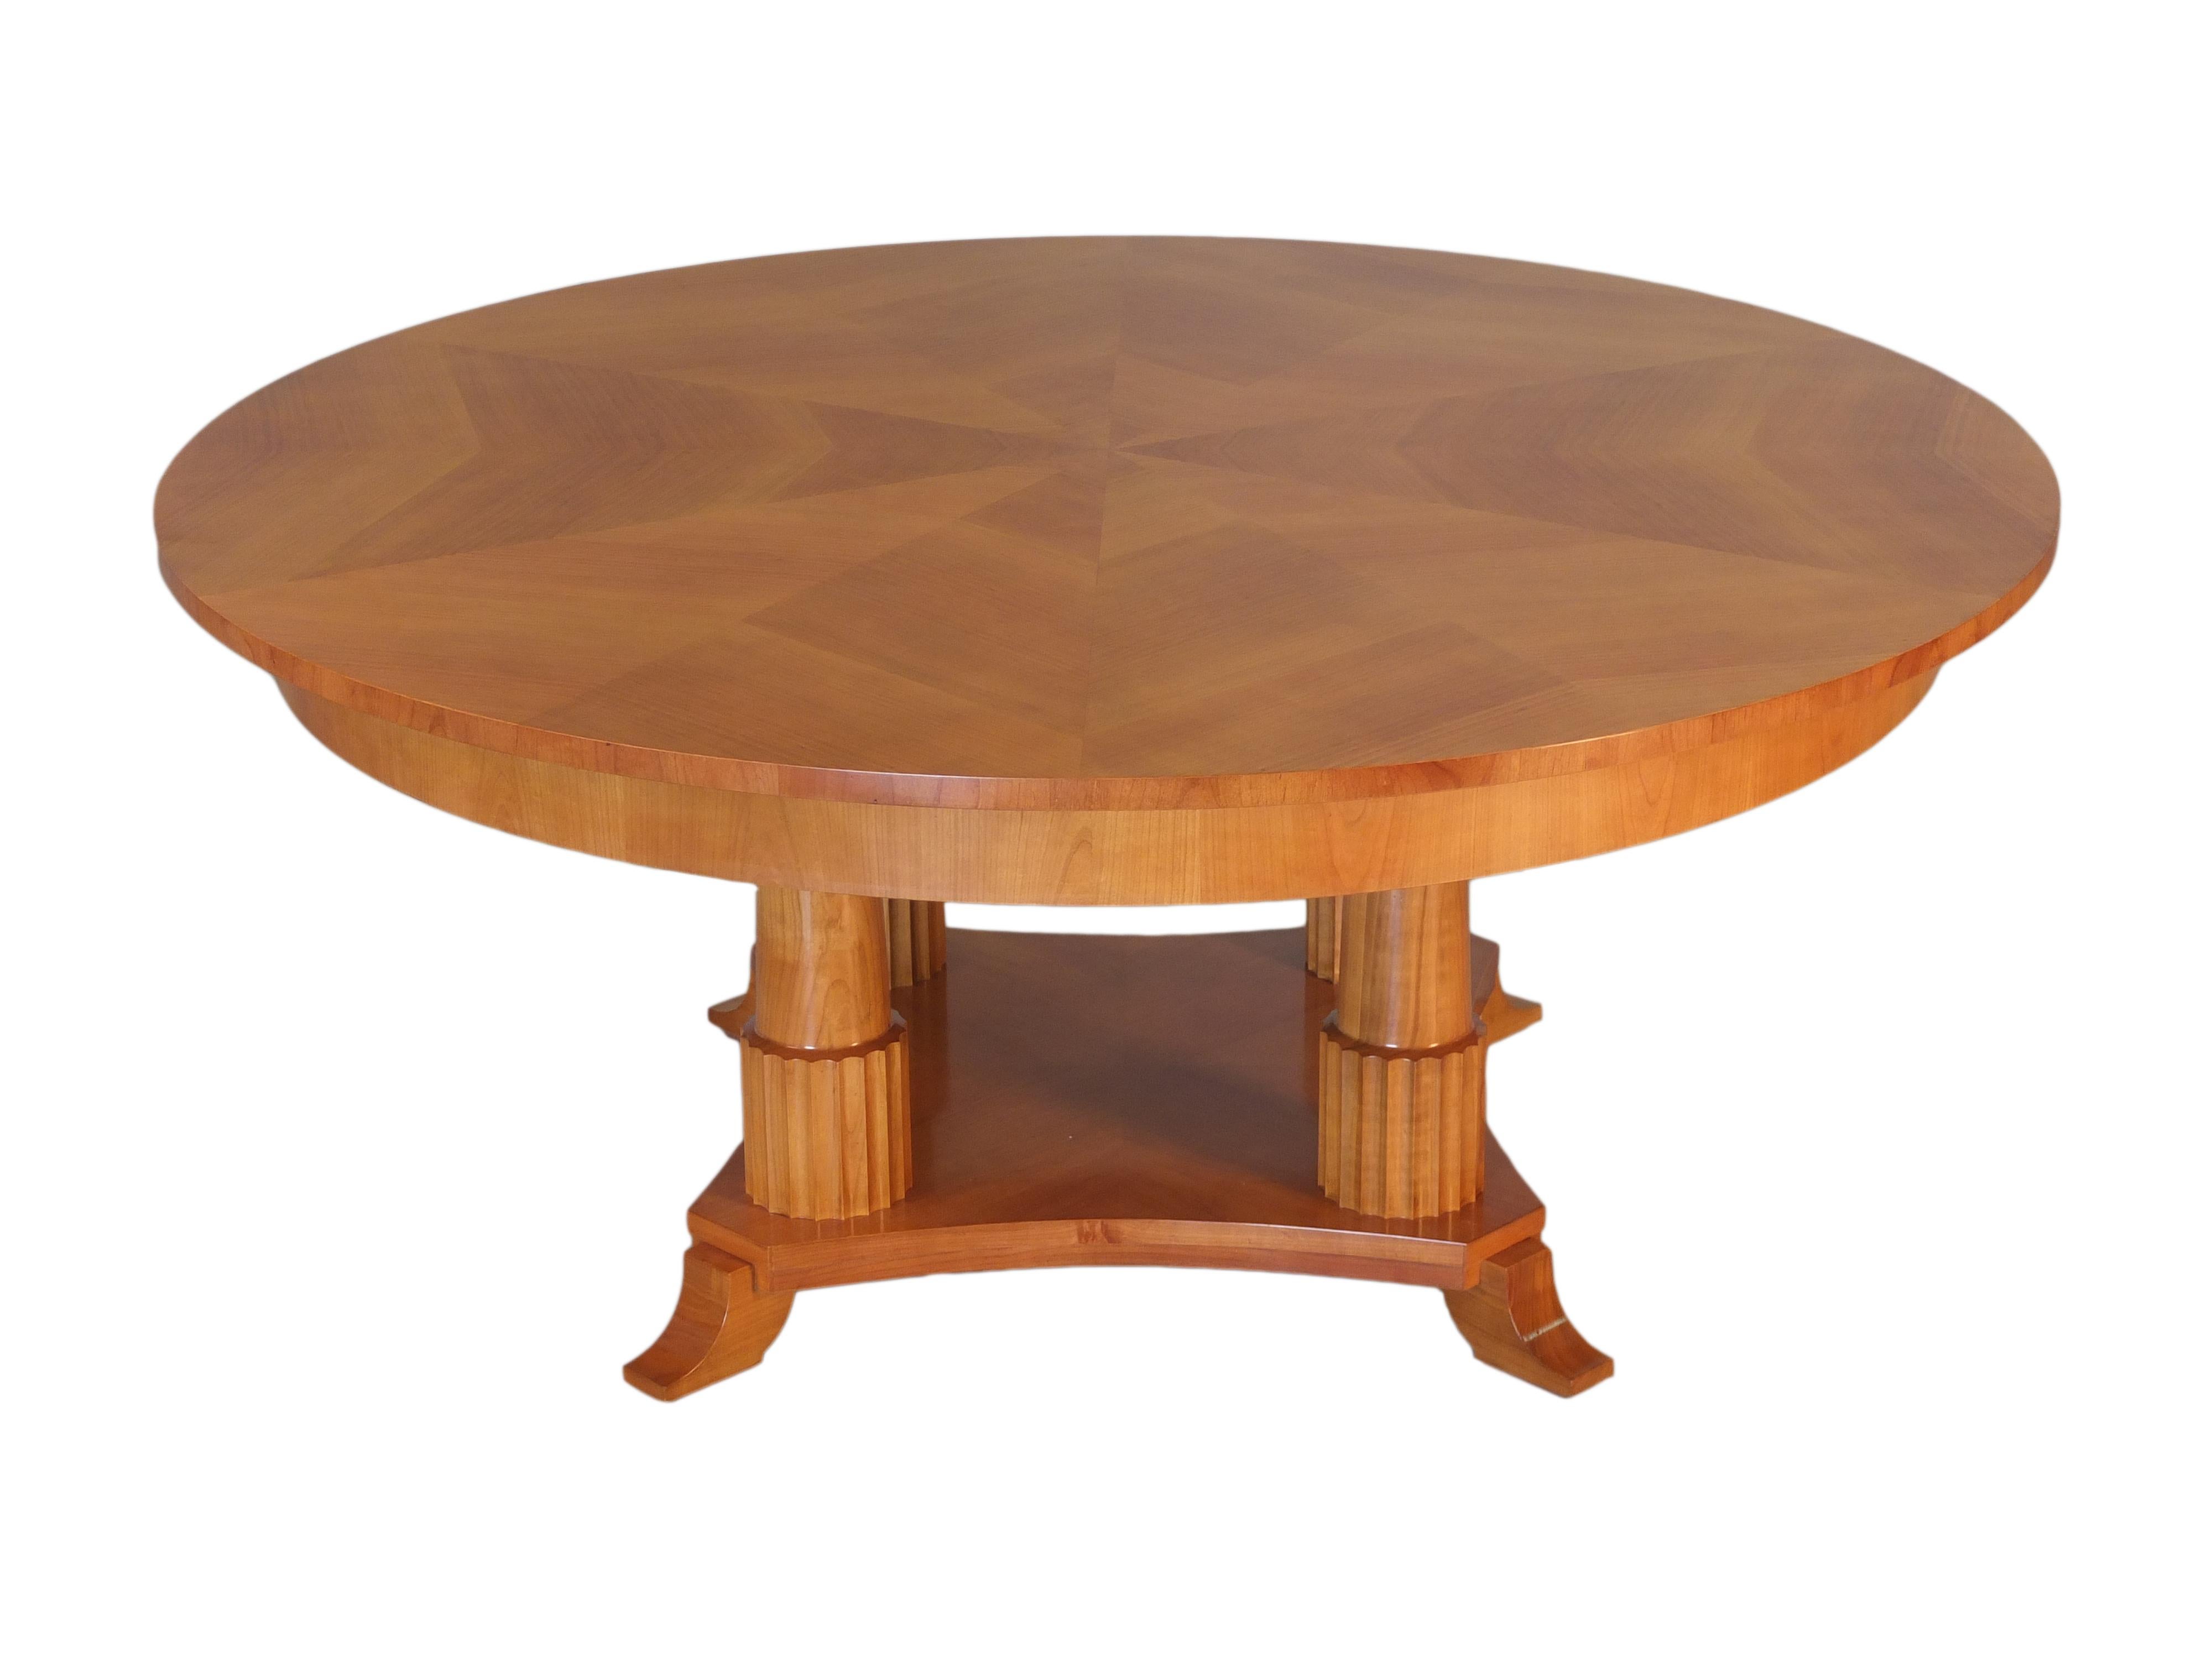 Italian Biedermeier Style Oval Table Made of Cherry Wood, Custom Made